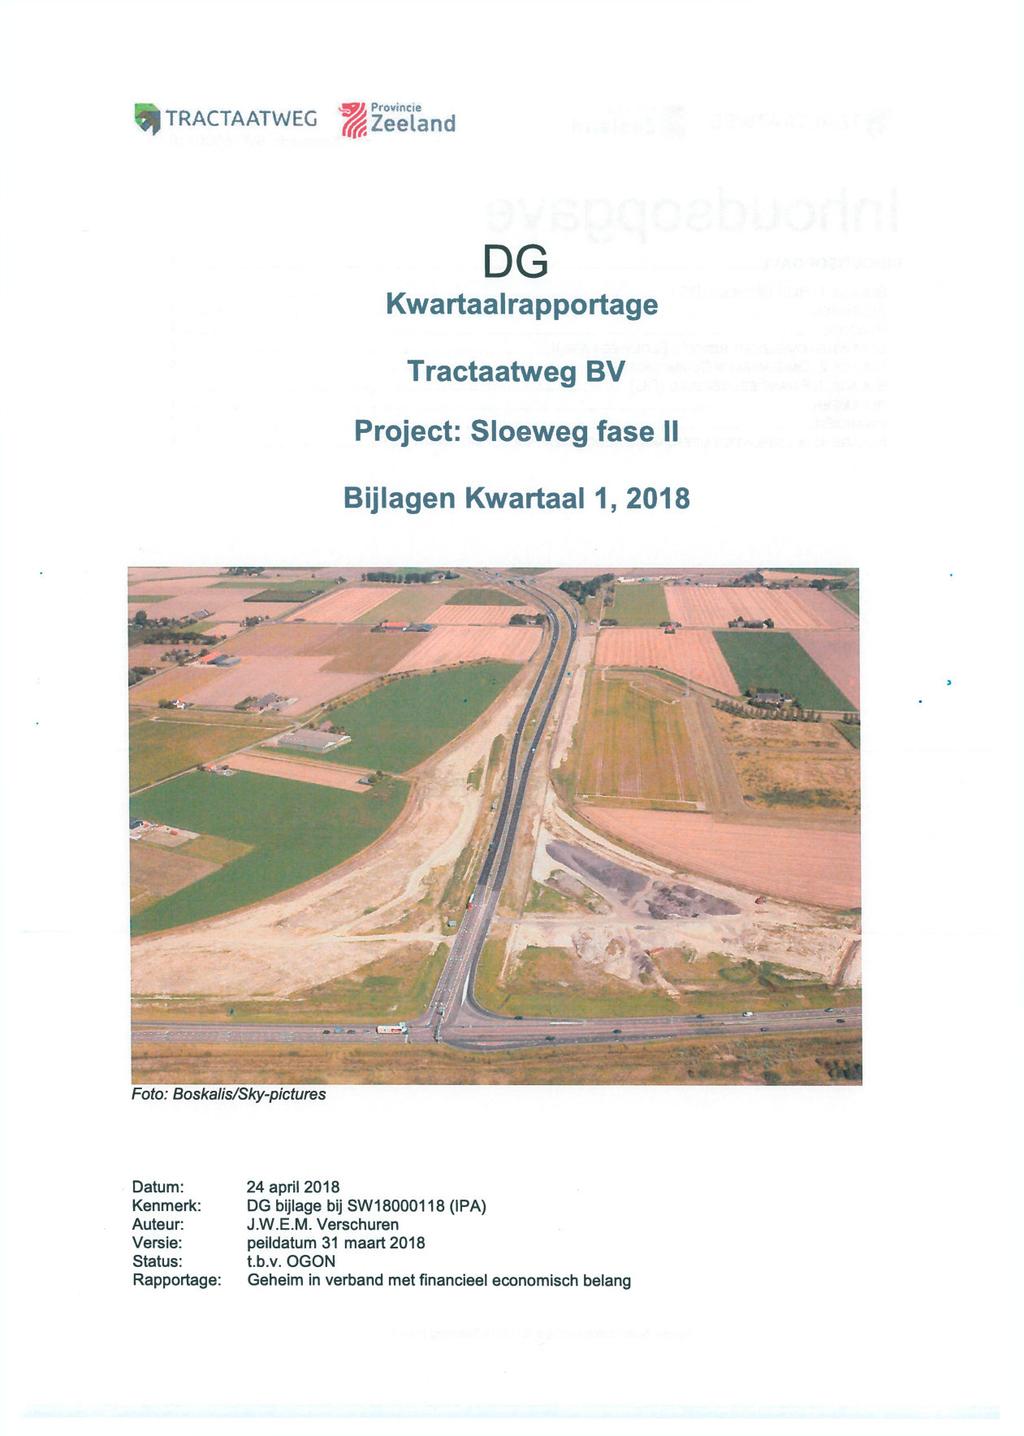 9) TRACTAATWEG ^Zeeland DG Kwartaalrapportage Tractaatweg BV Project: Sloeweg fase II Bijlagen Kwartaal 1, 2018 y.,n. r f > ' i T I' J. II / ft t <r.